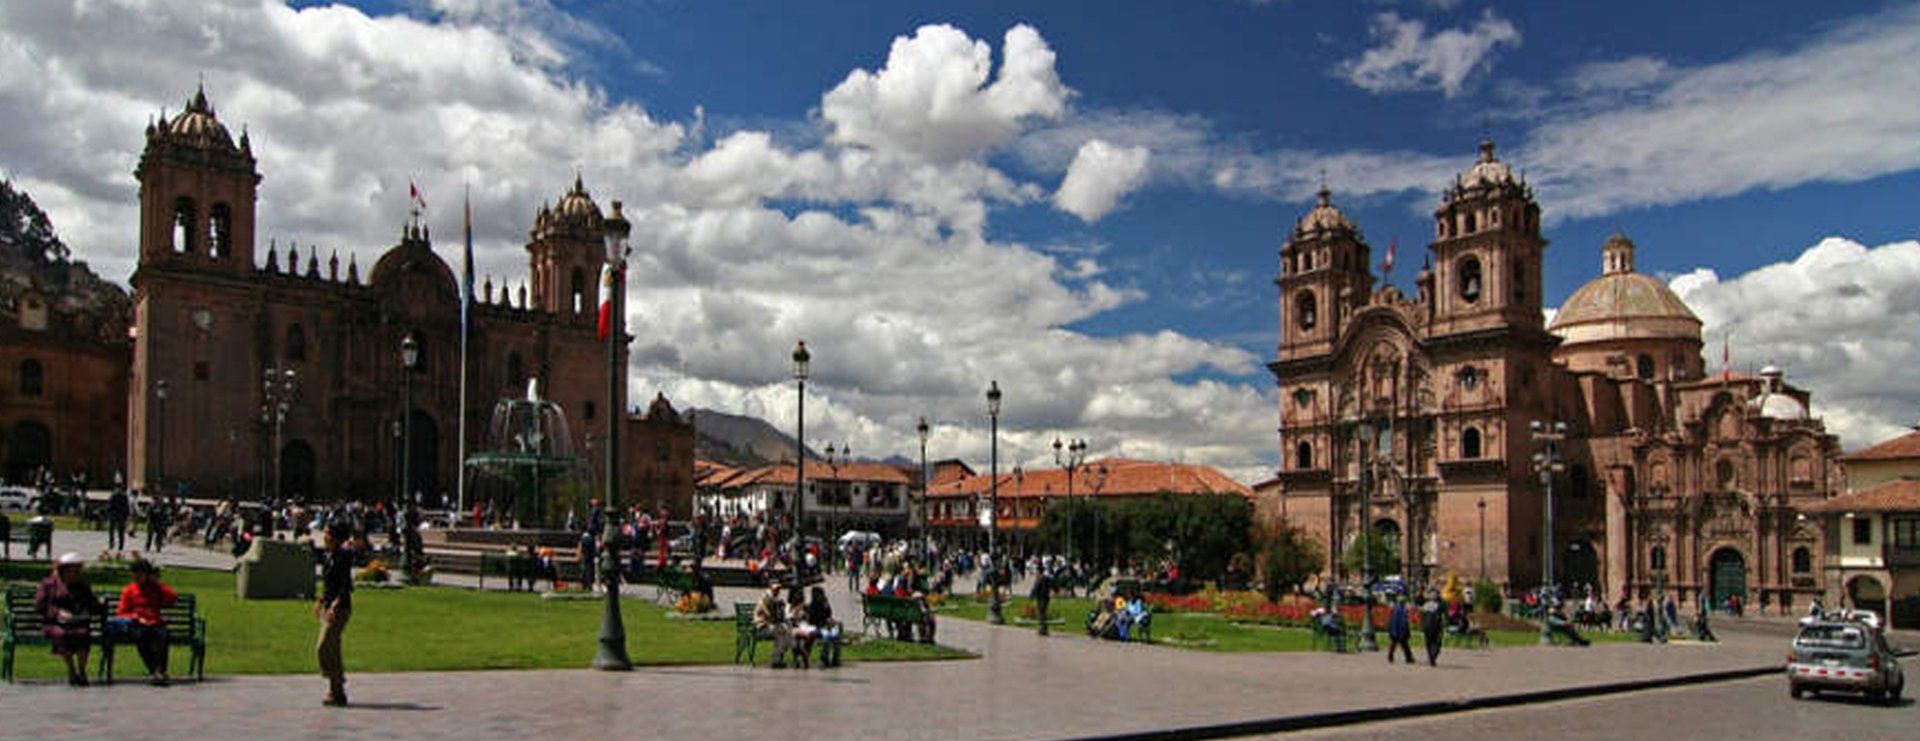 Hotel Kutty Wasi Cusco, servicio de hospedaje en Urubamba - Cusco - Perú